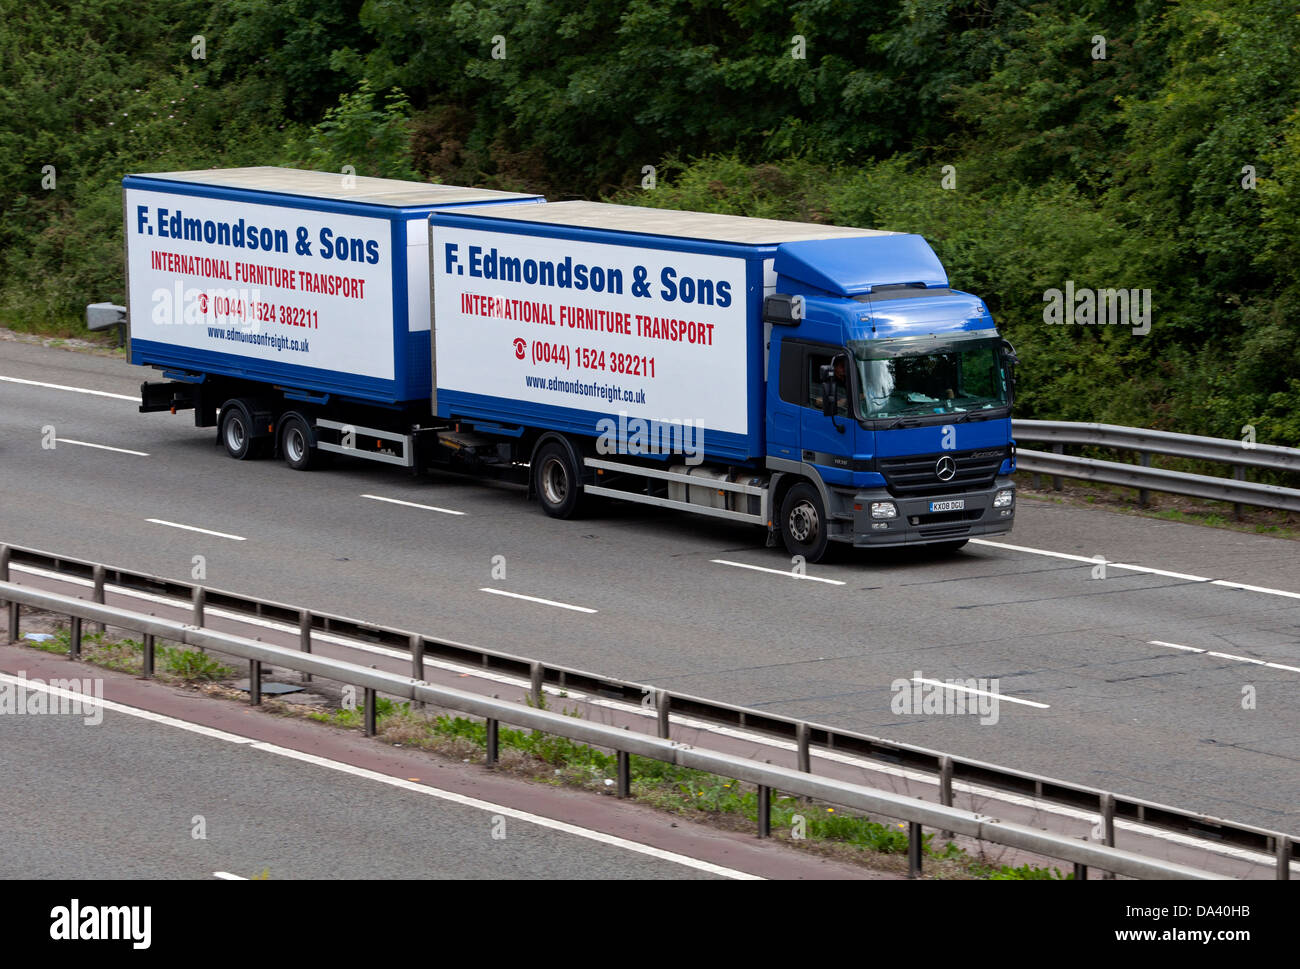 F. Edmondson transporte internacional de muebles camión en autopista M40, REINO UNIDO Foto de stock